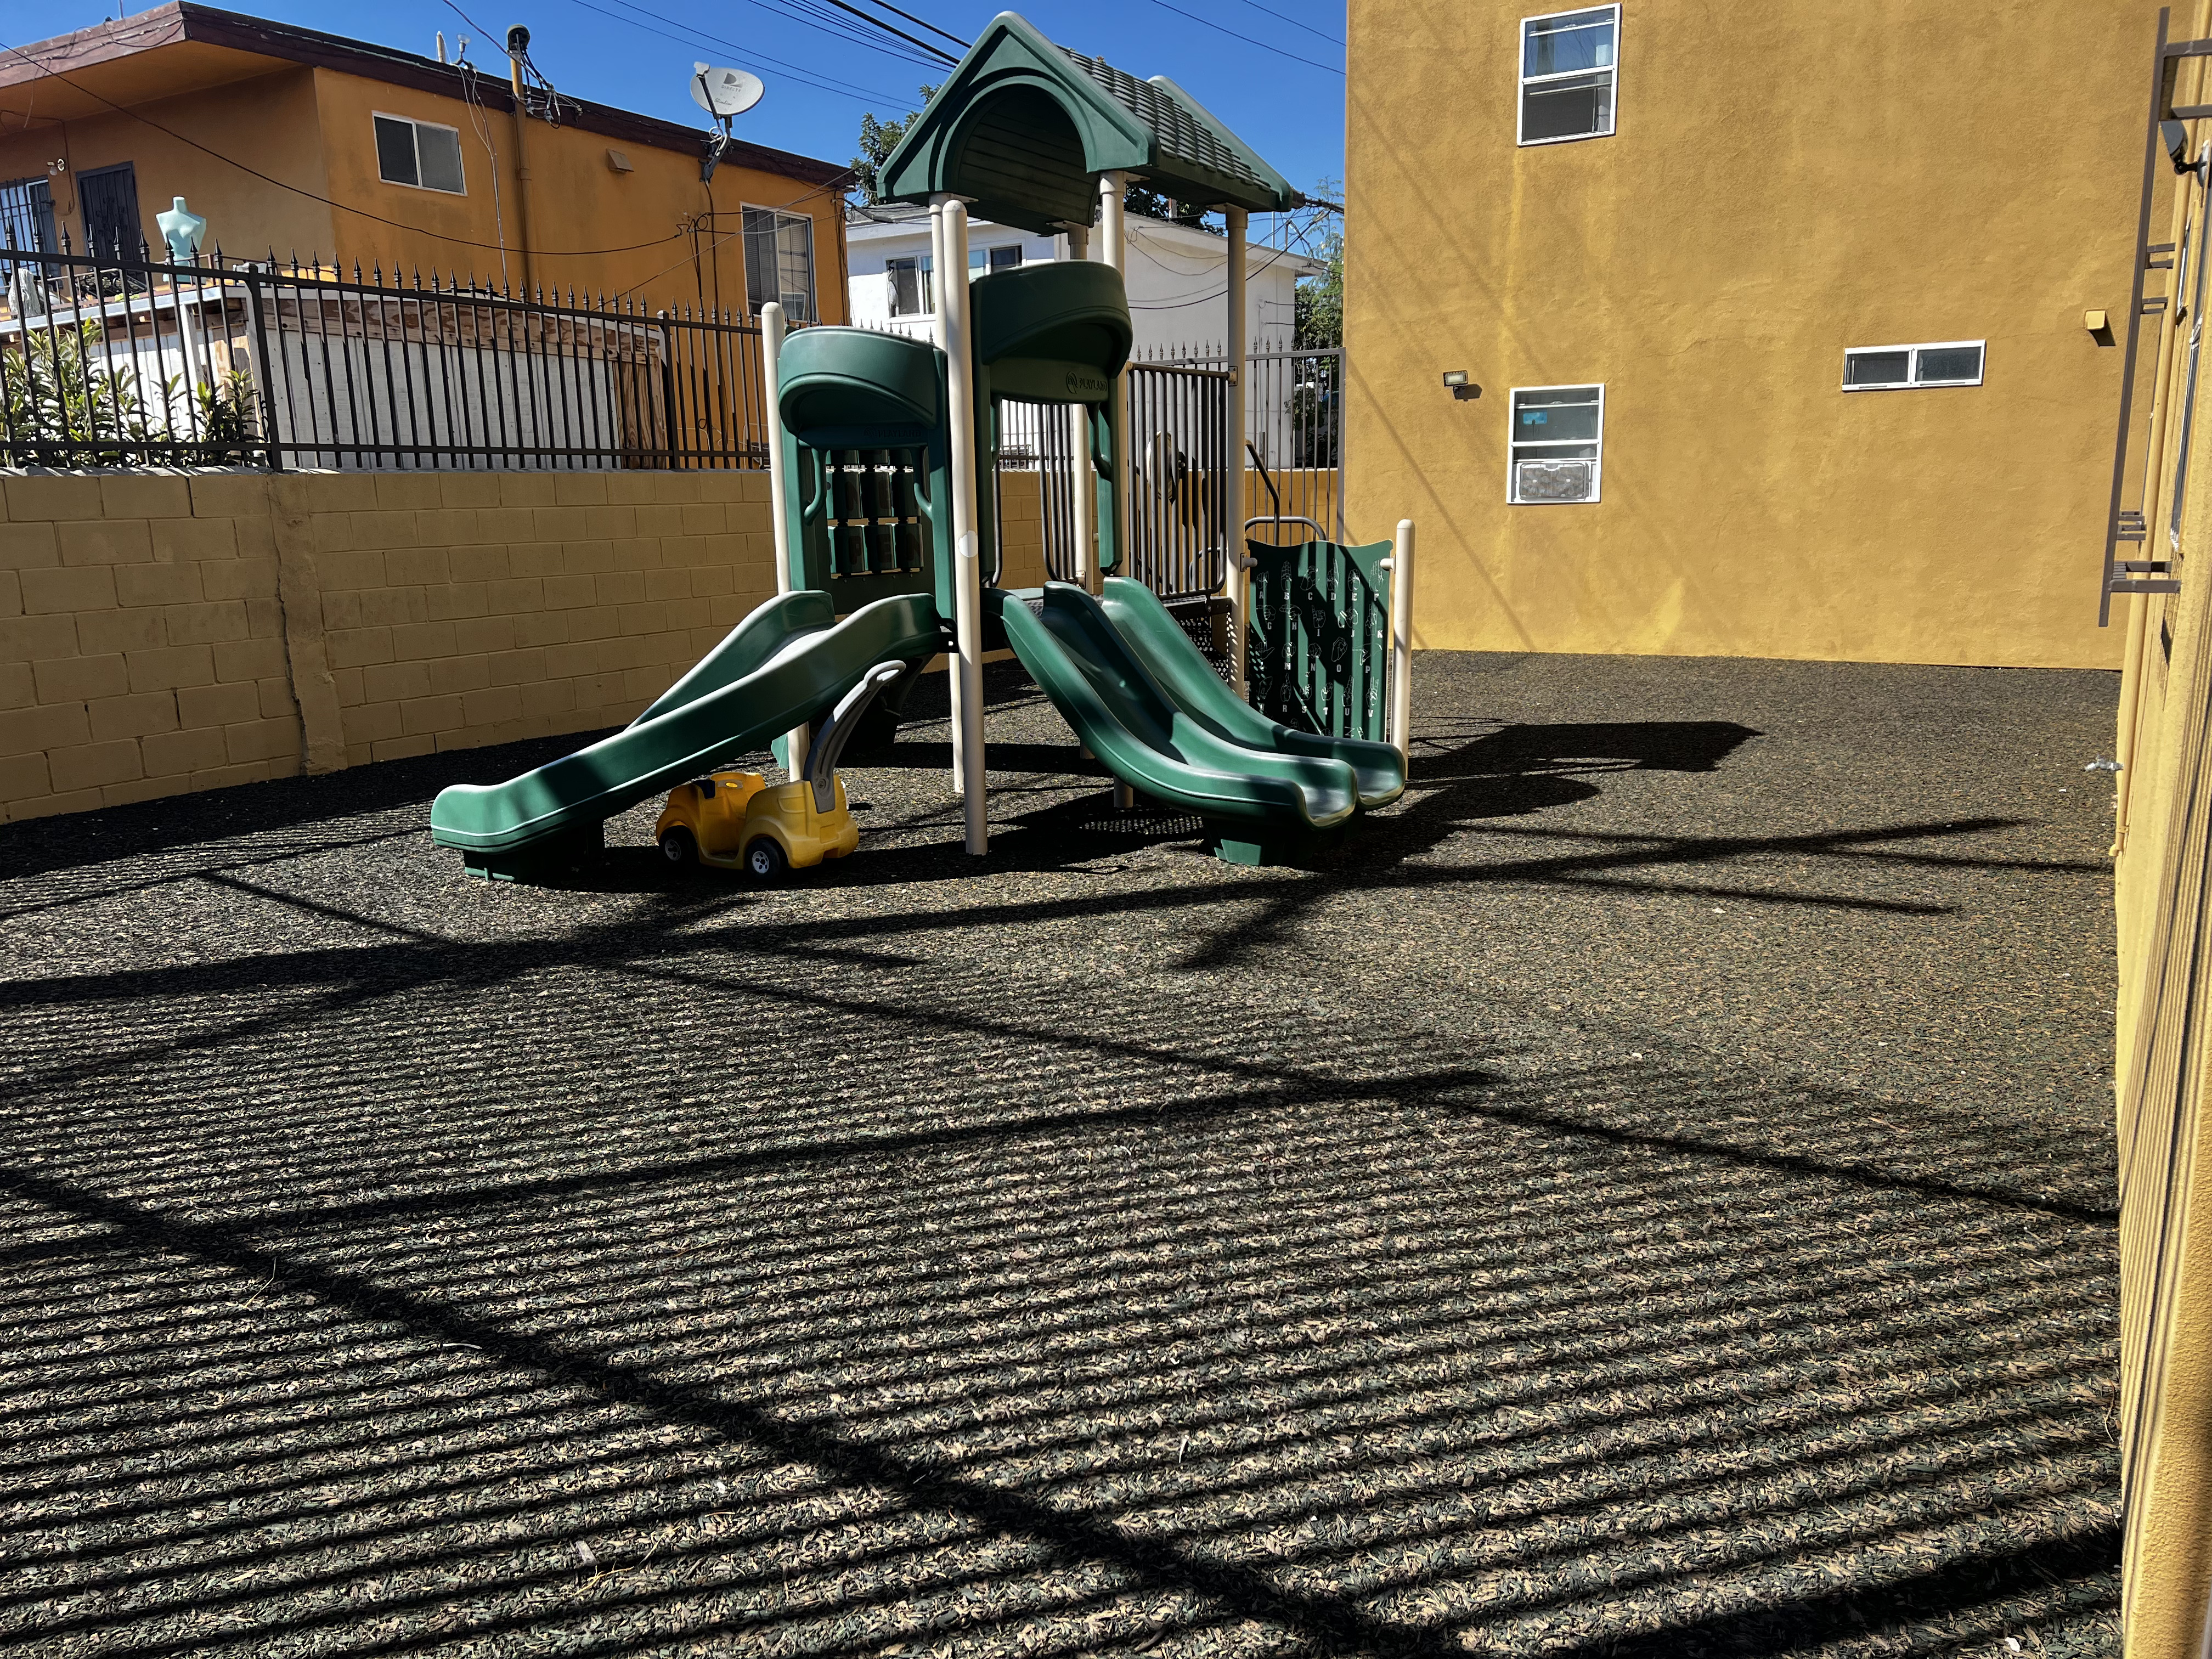 A dark green colored playground